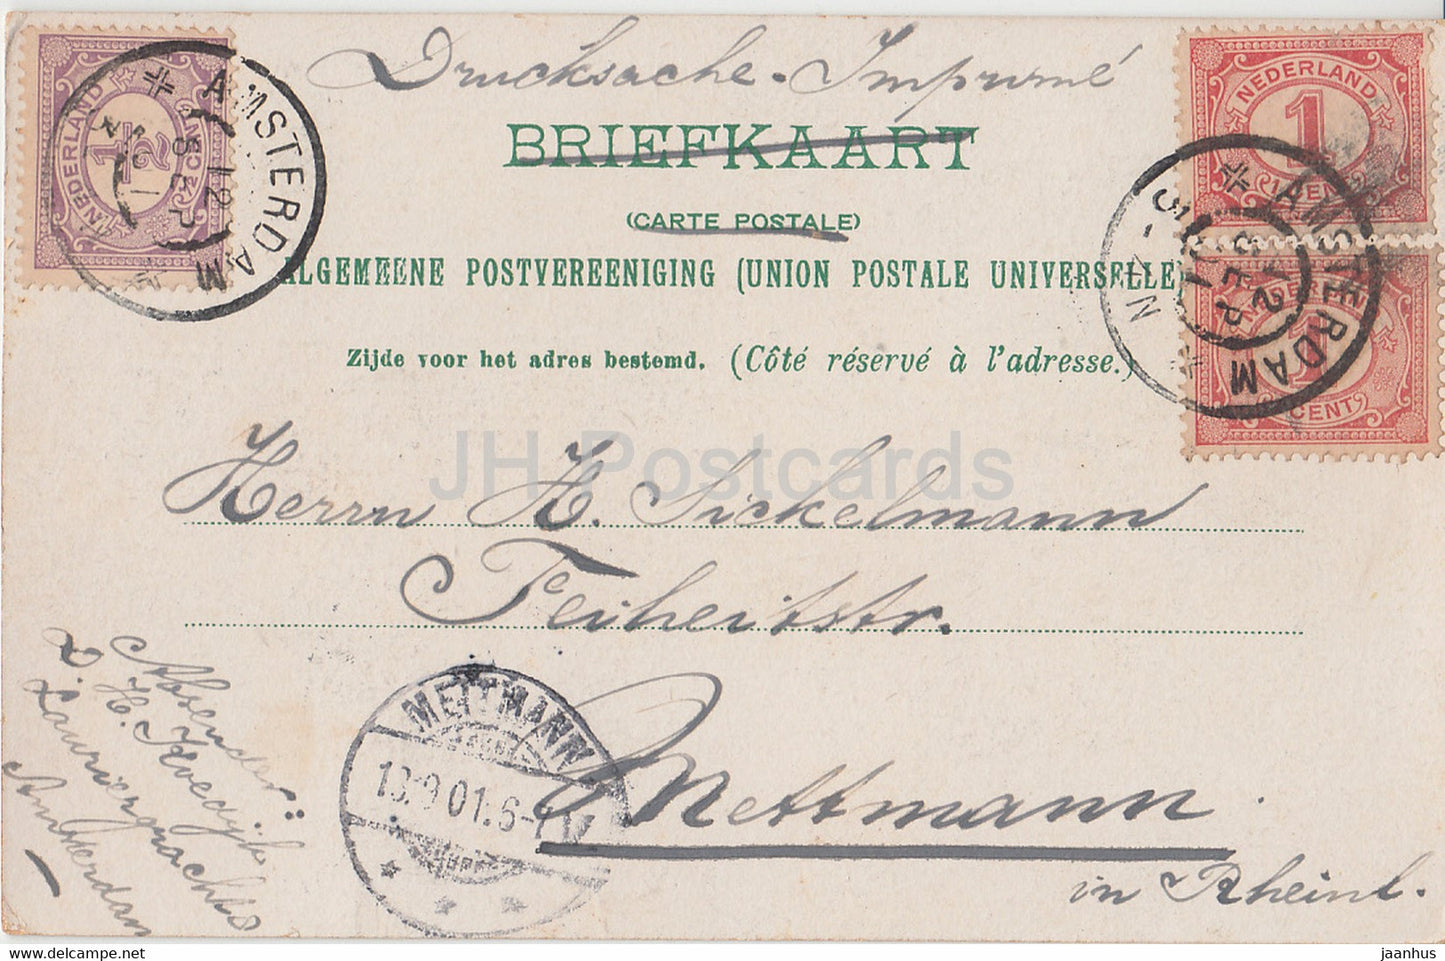 Amsterdam - Het Centraal Station - gare - carte postale ancienne - 1901 - Pays-Bas - utilisé